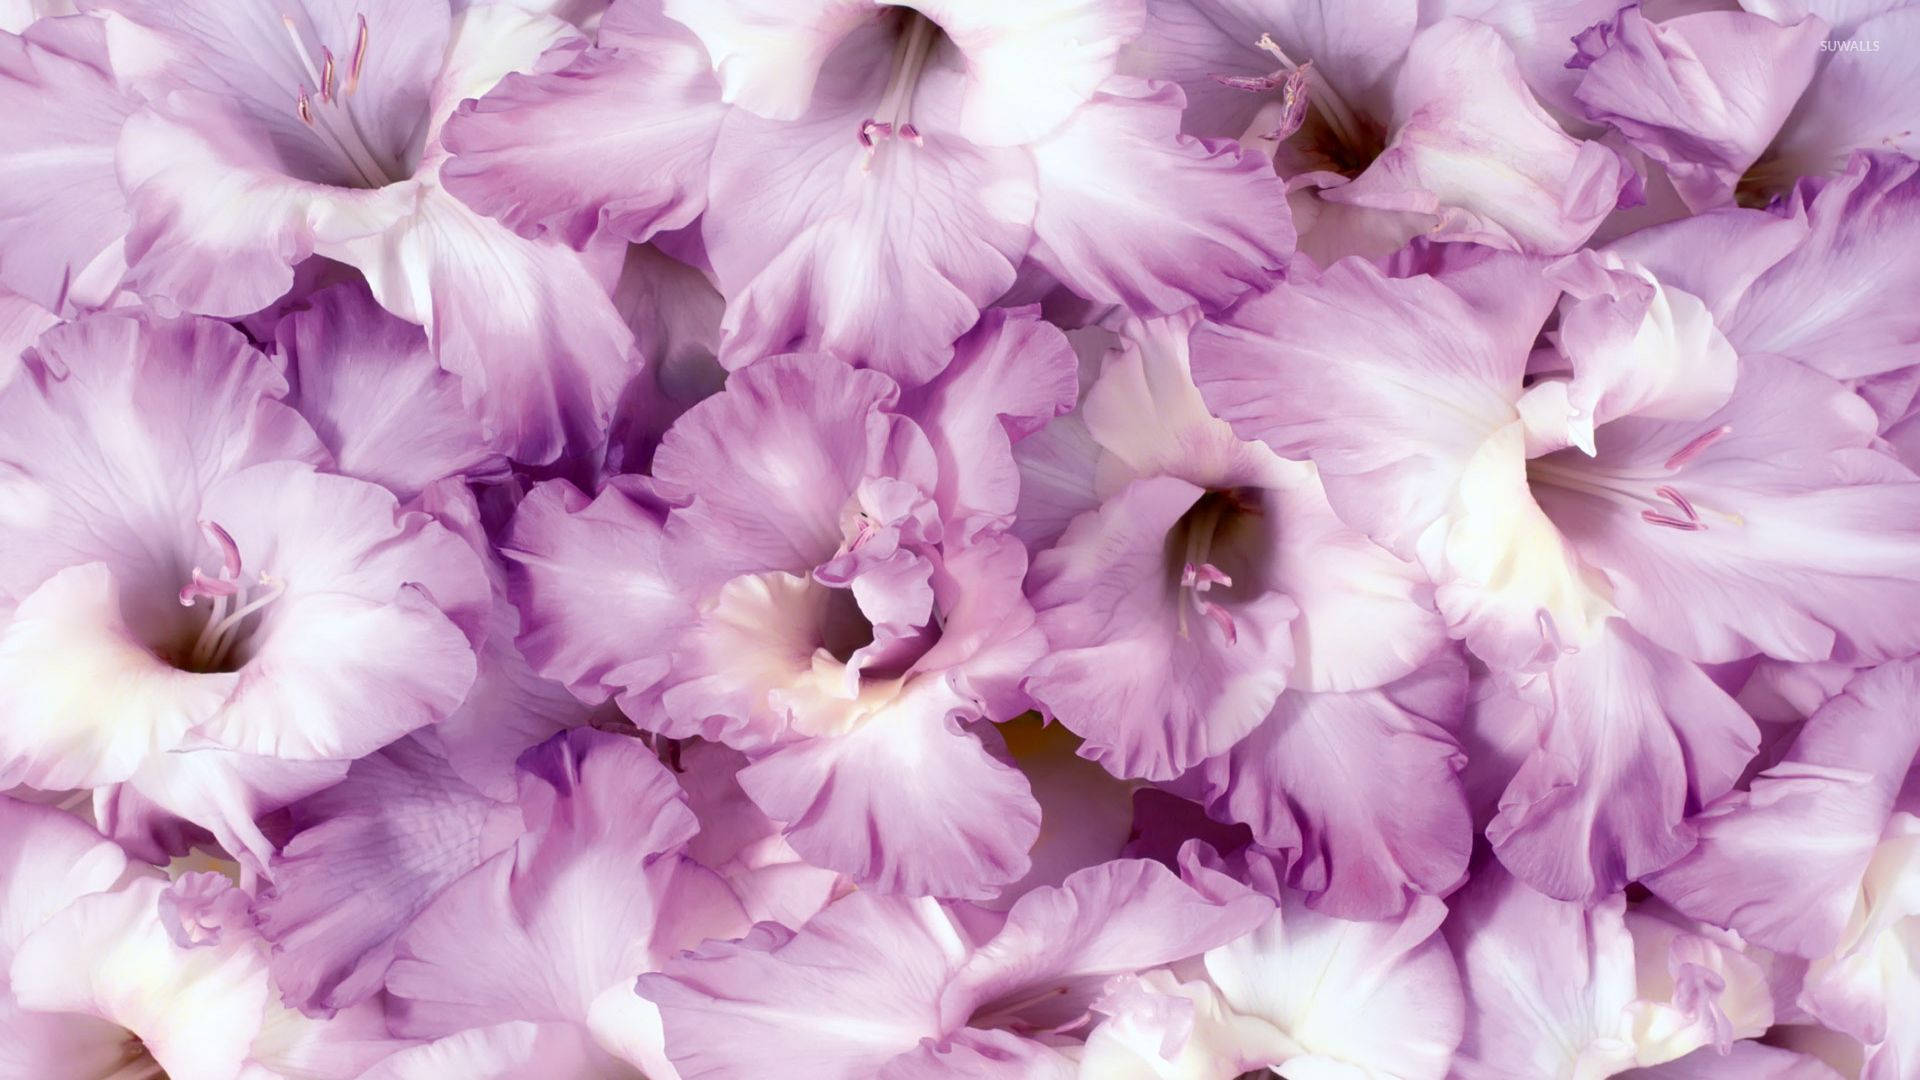 Violettegladiolenblumen Wallpaper